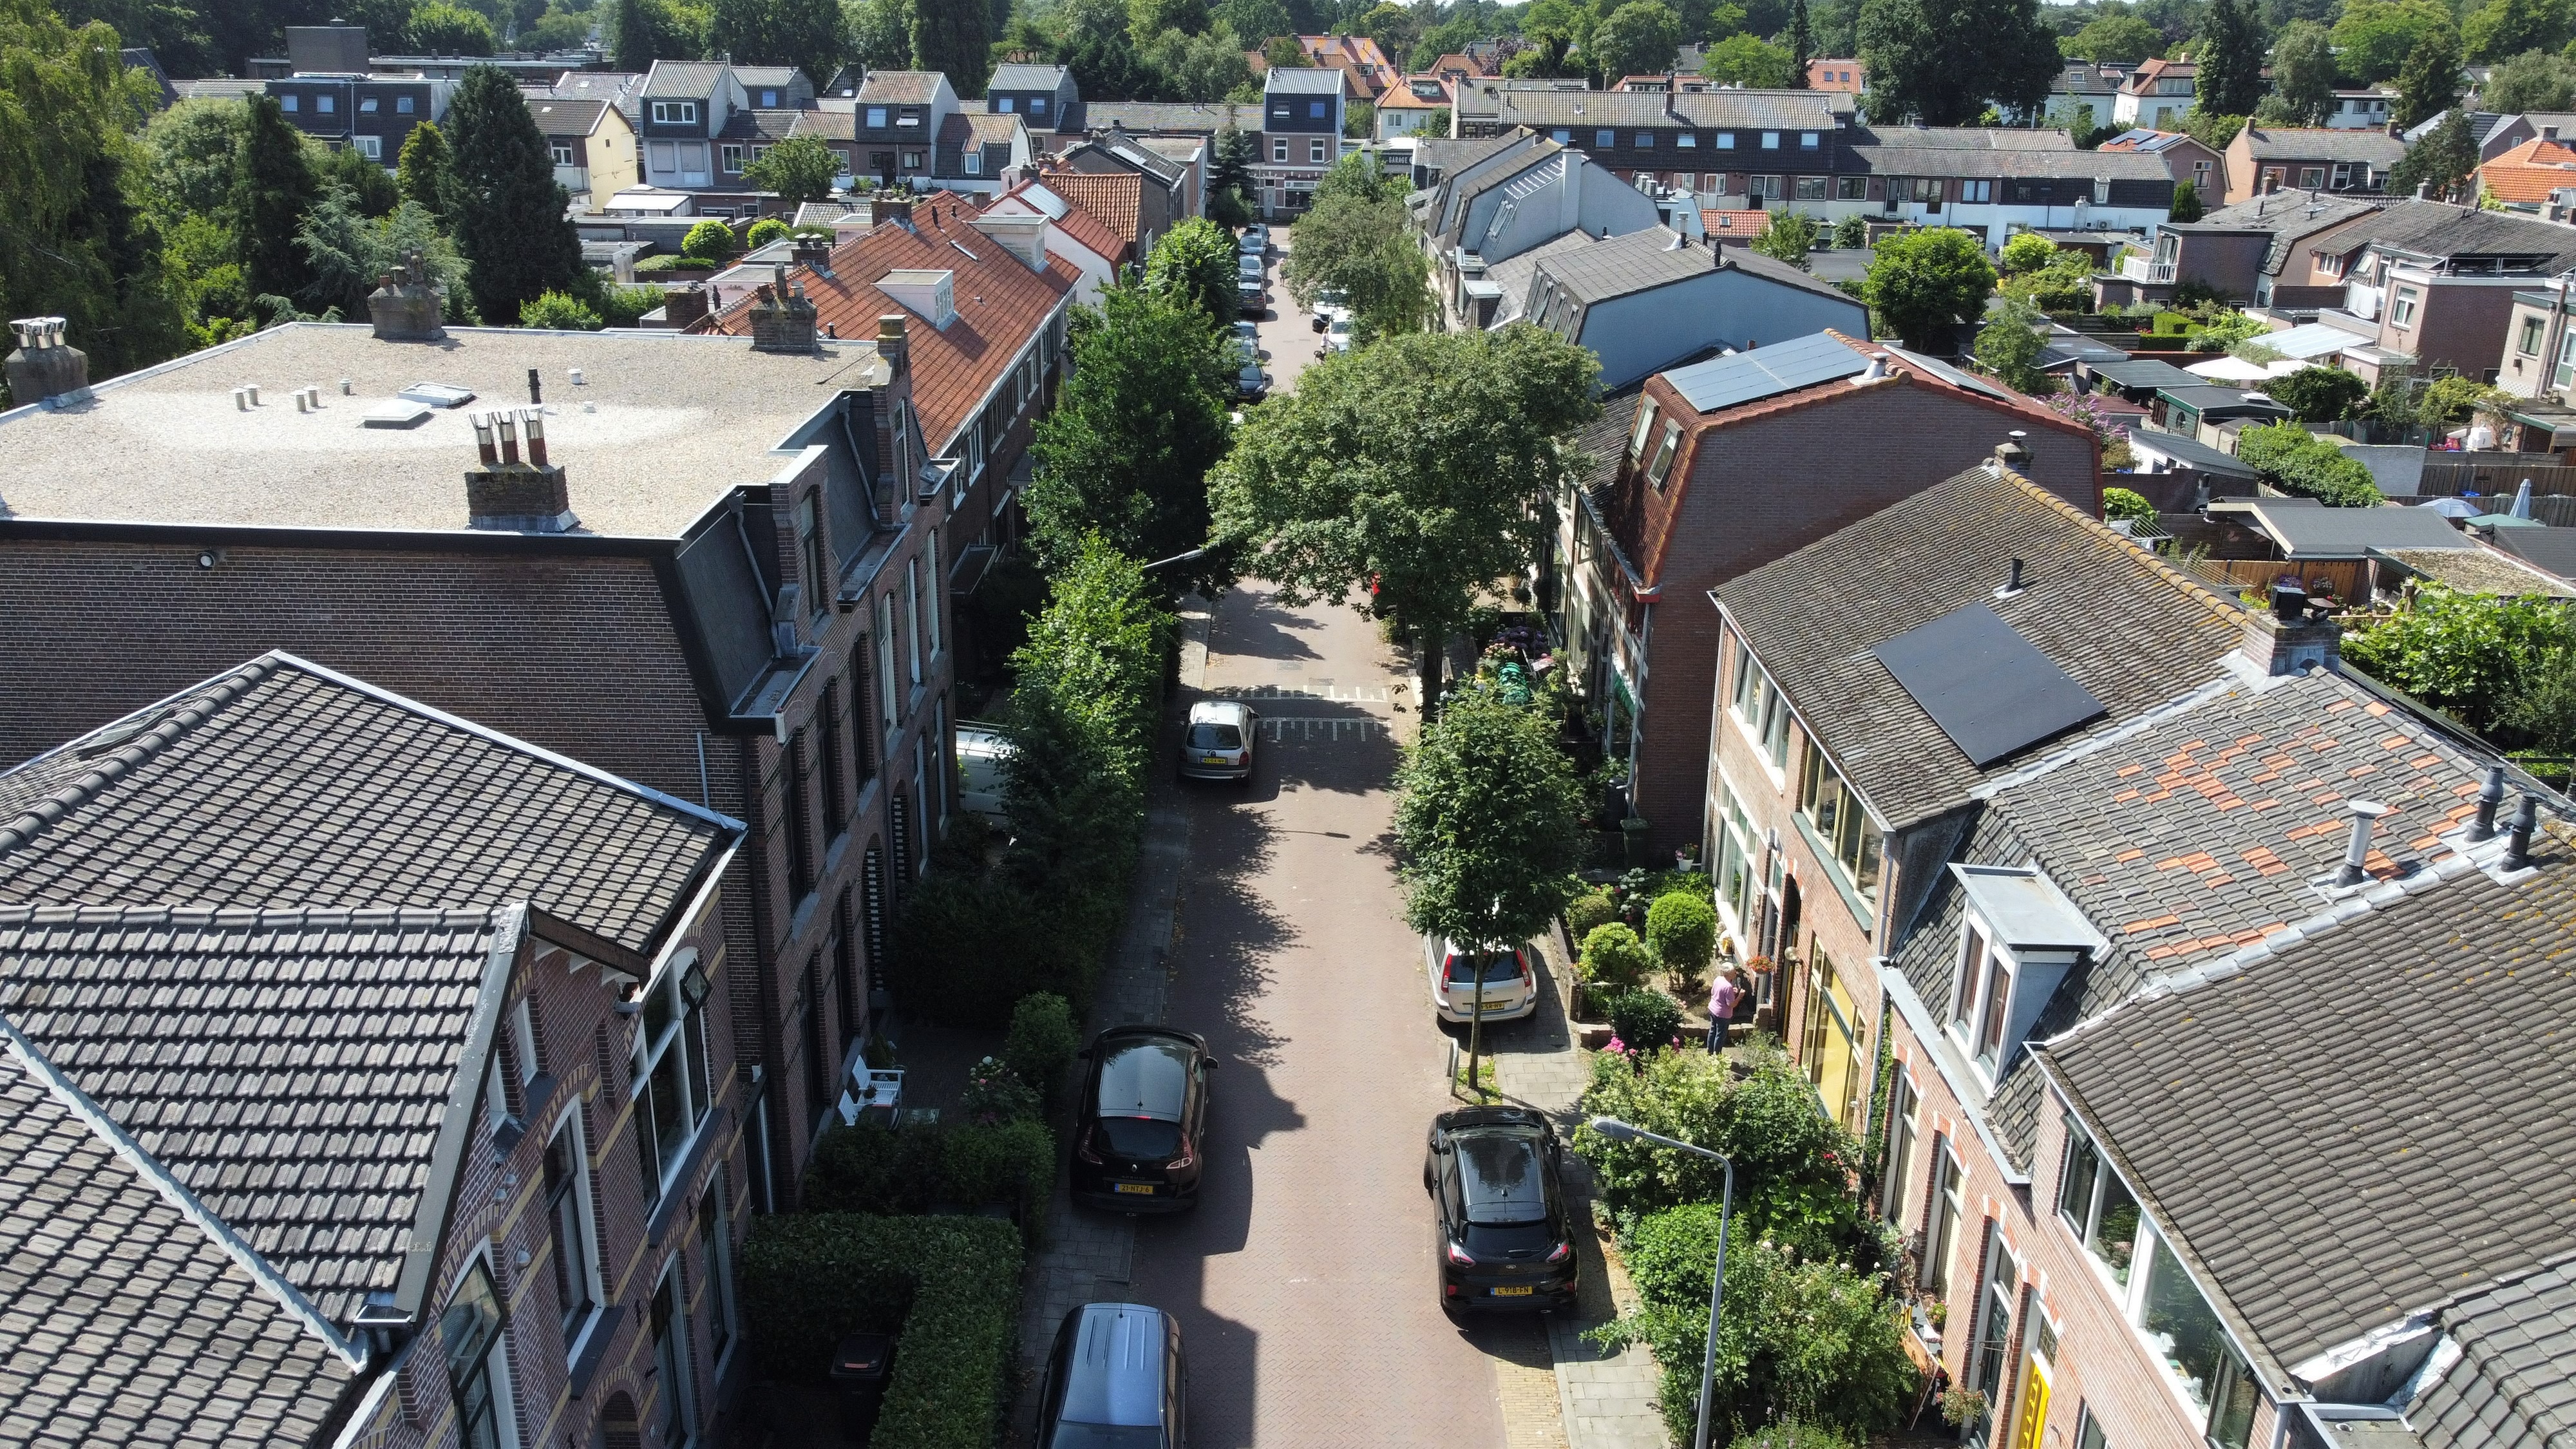 Woning / appartement - Hilversum - Pauwenstraat 11 abcd